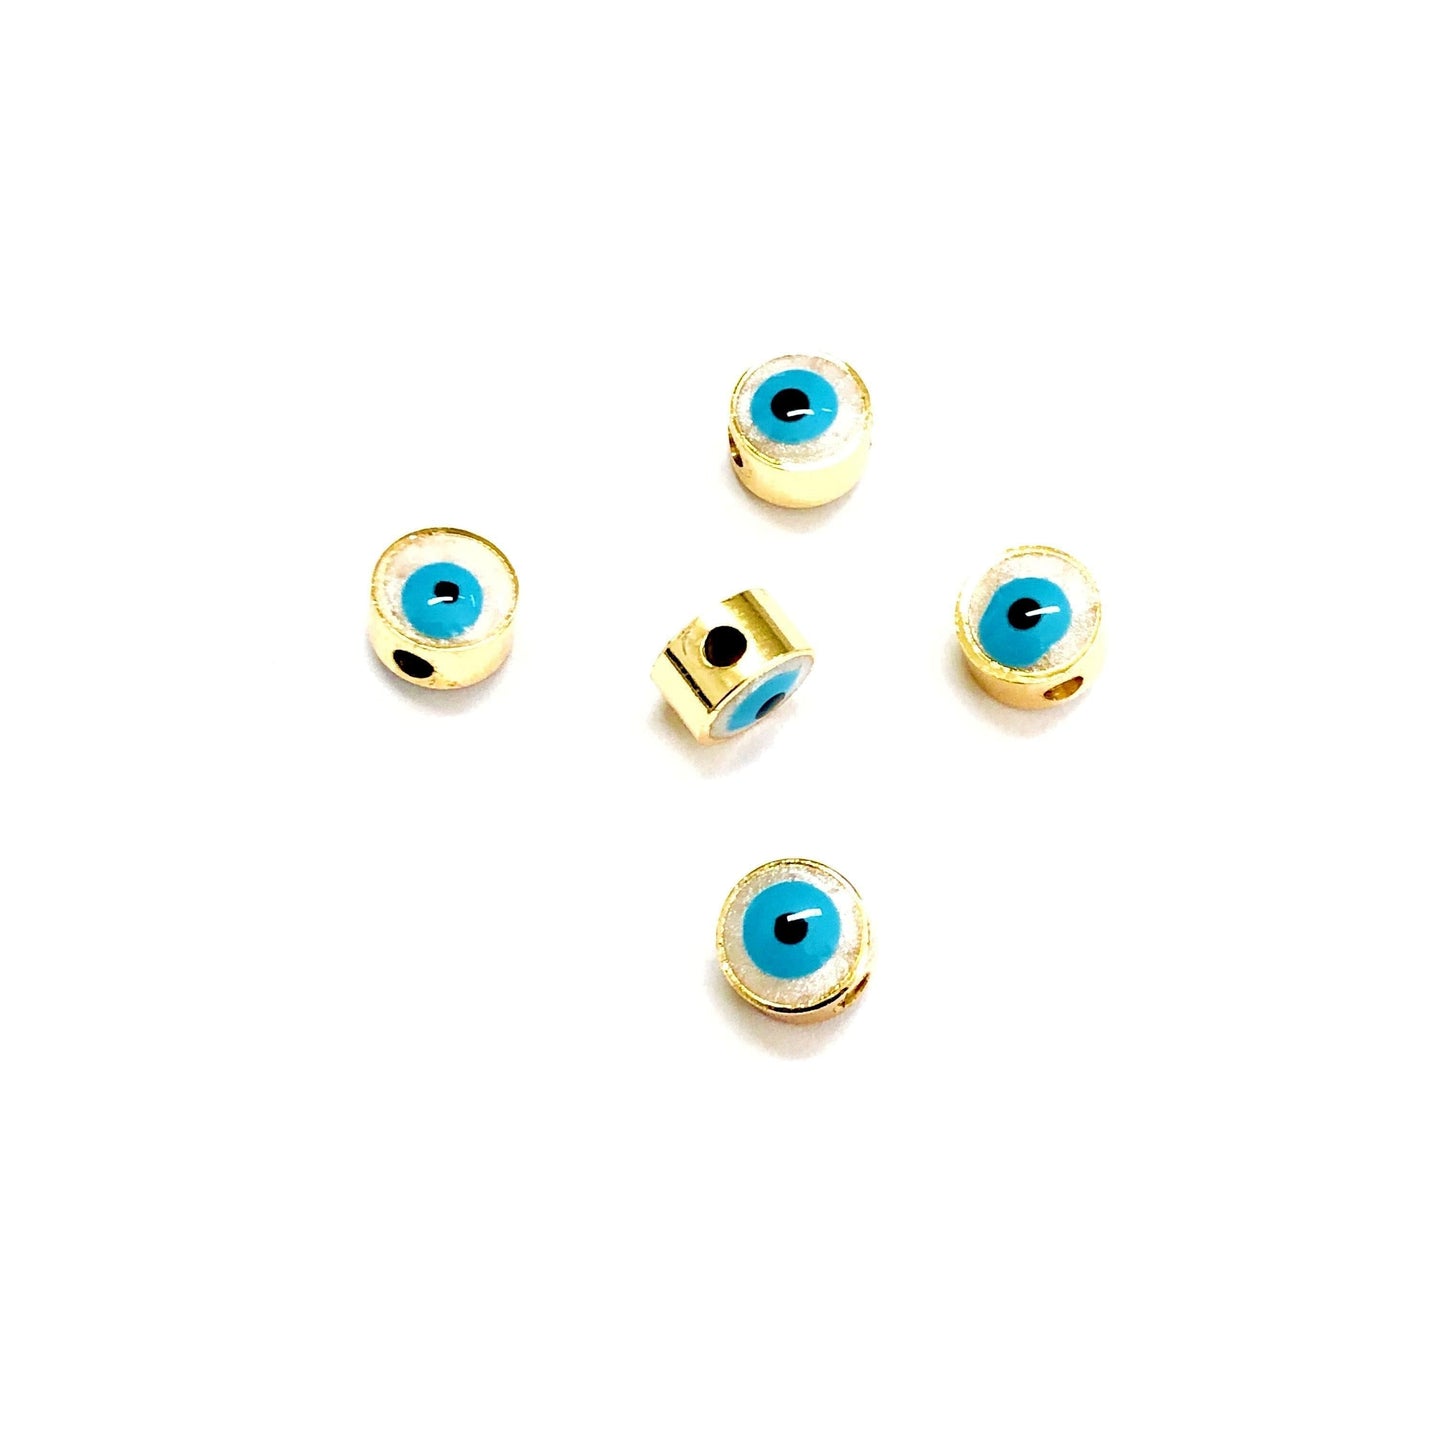 Vergoldete, verputzte Böse-Augen-Perlen, 7 mm – Perlmutt 